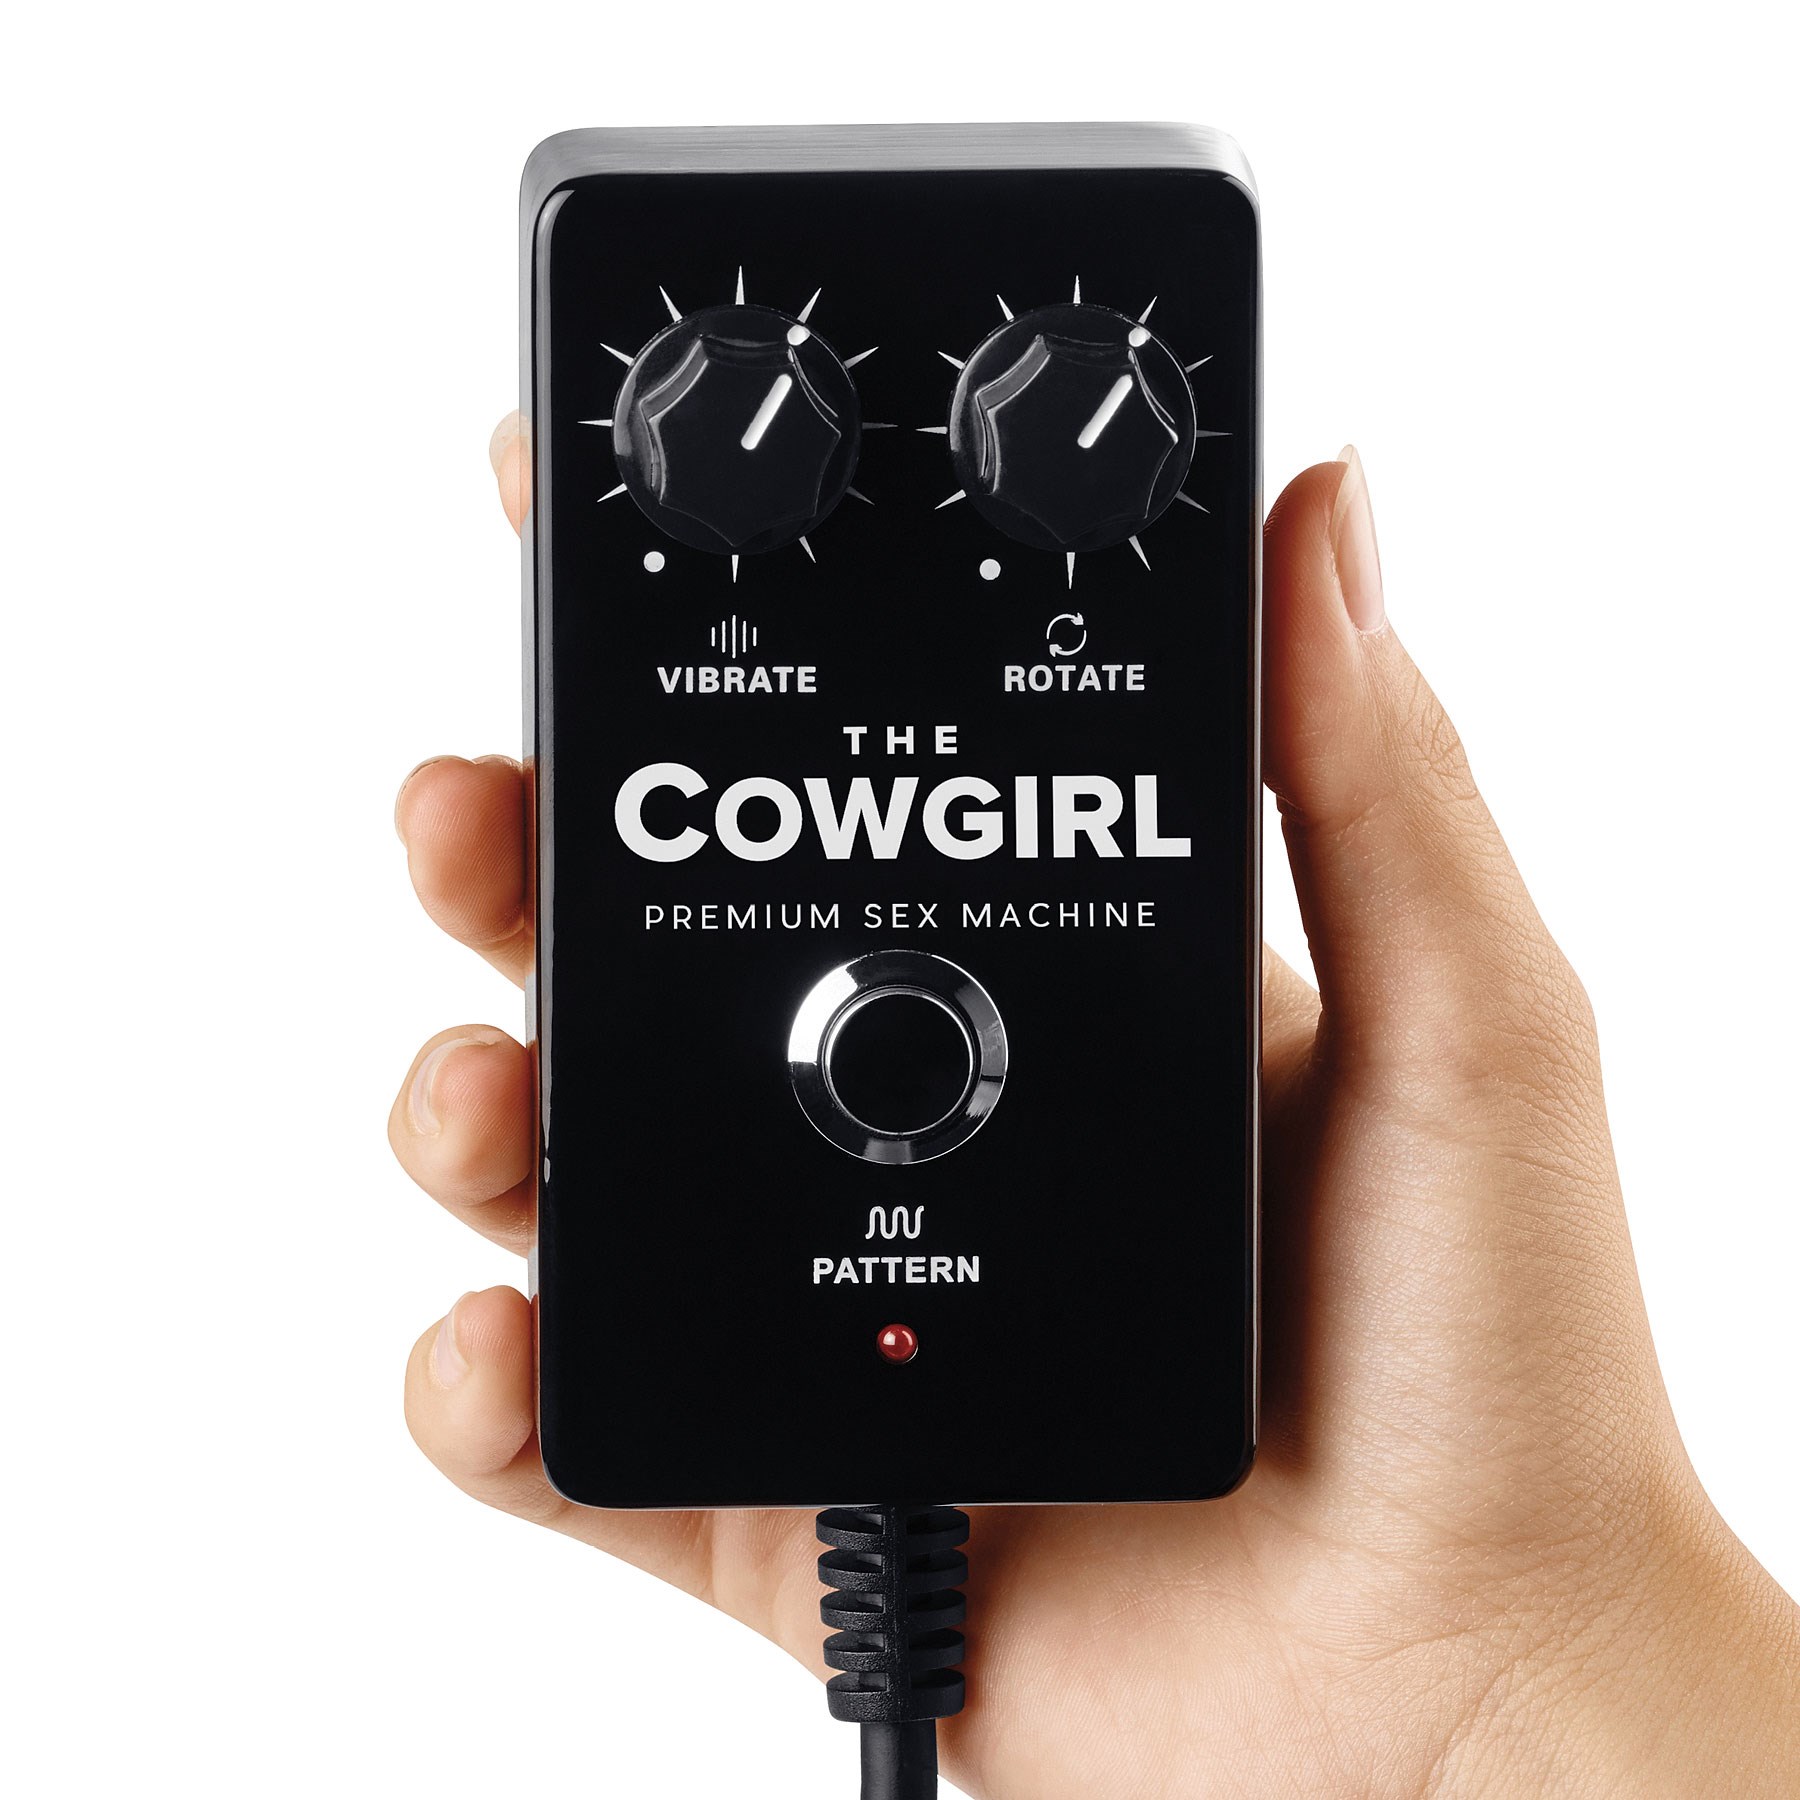 Cowgirl Premium Sex Machine controls